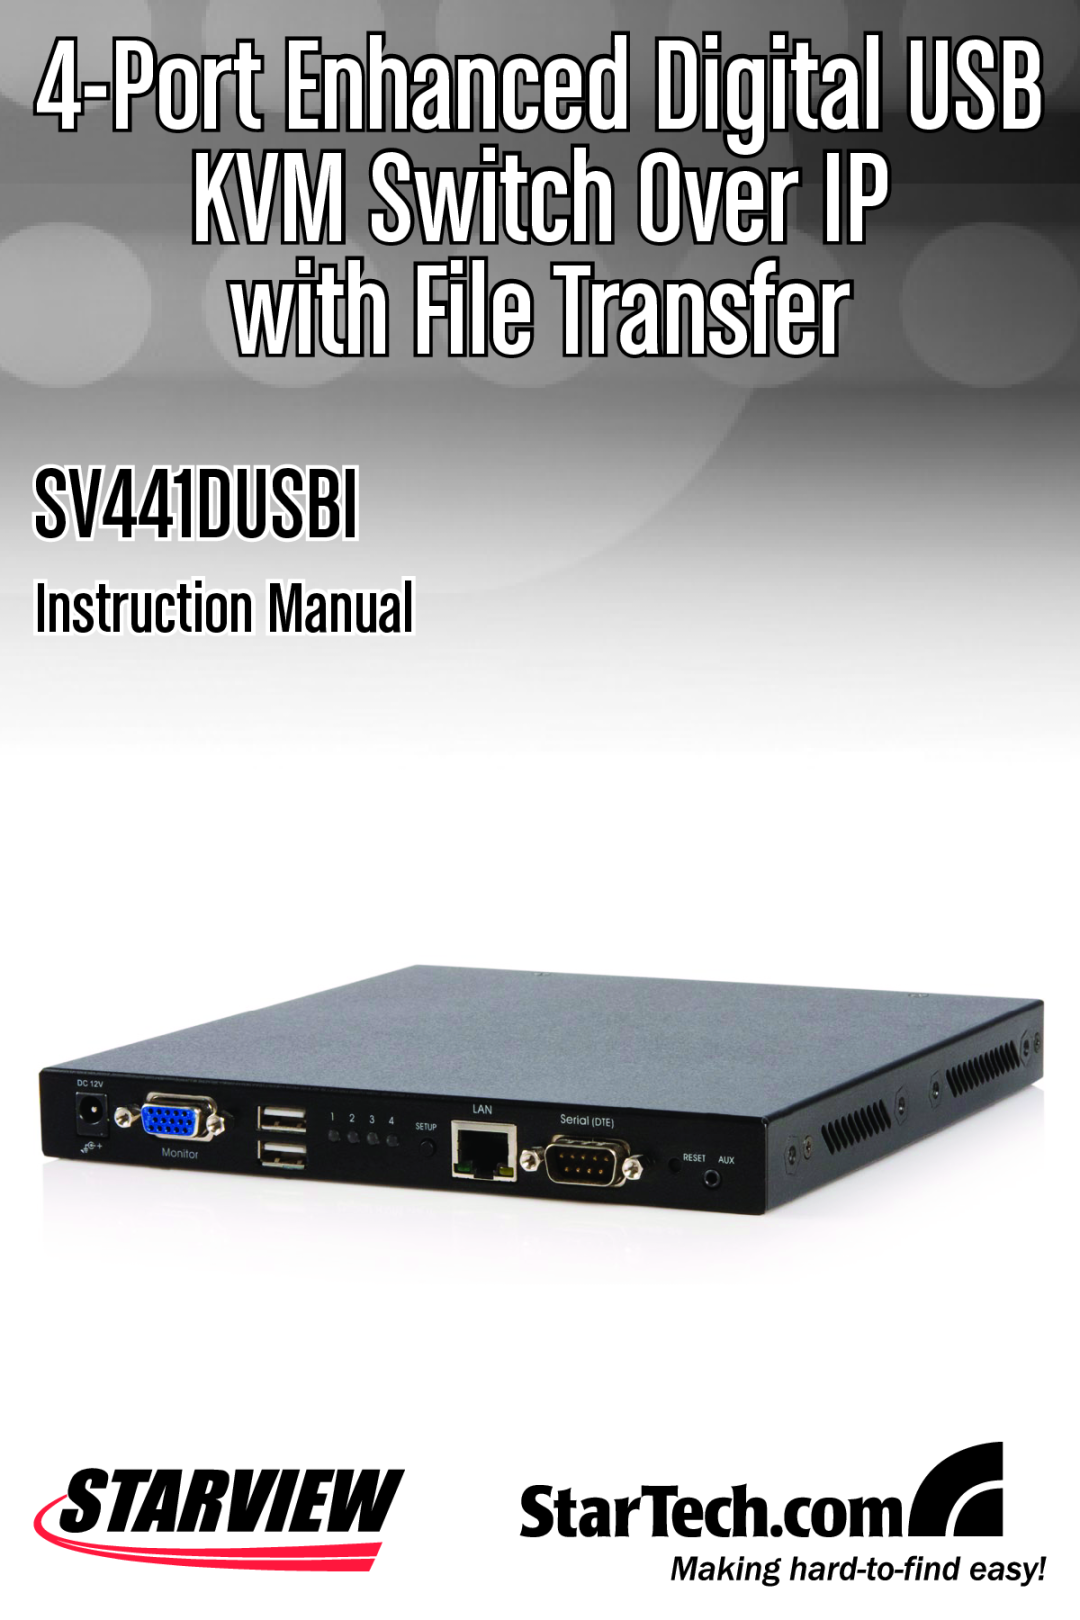 StarTech.com SV441DUSBI instruction manual with FileTransfer, KVM Switch Over IP, Port Enhanced Digital USB 